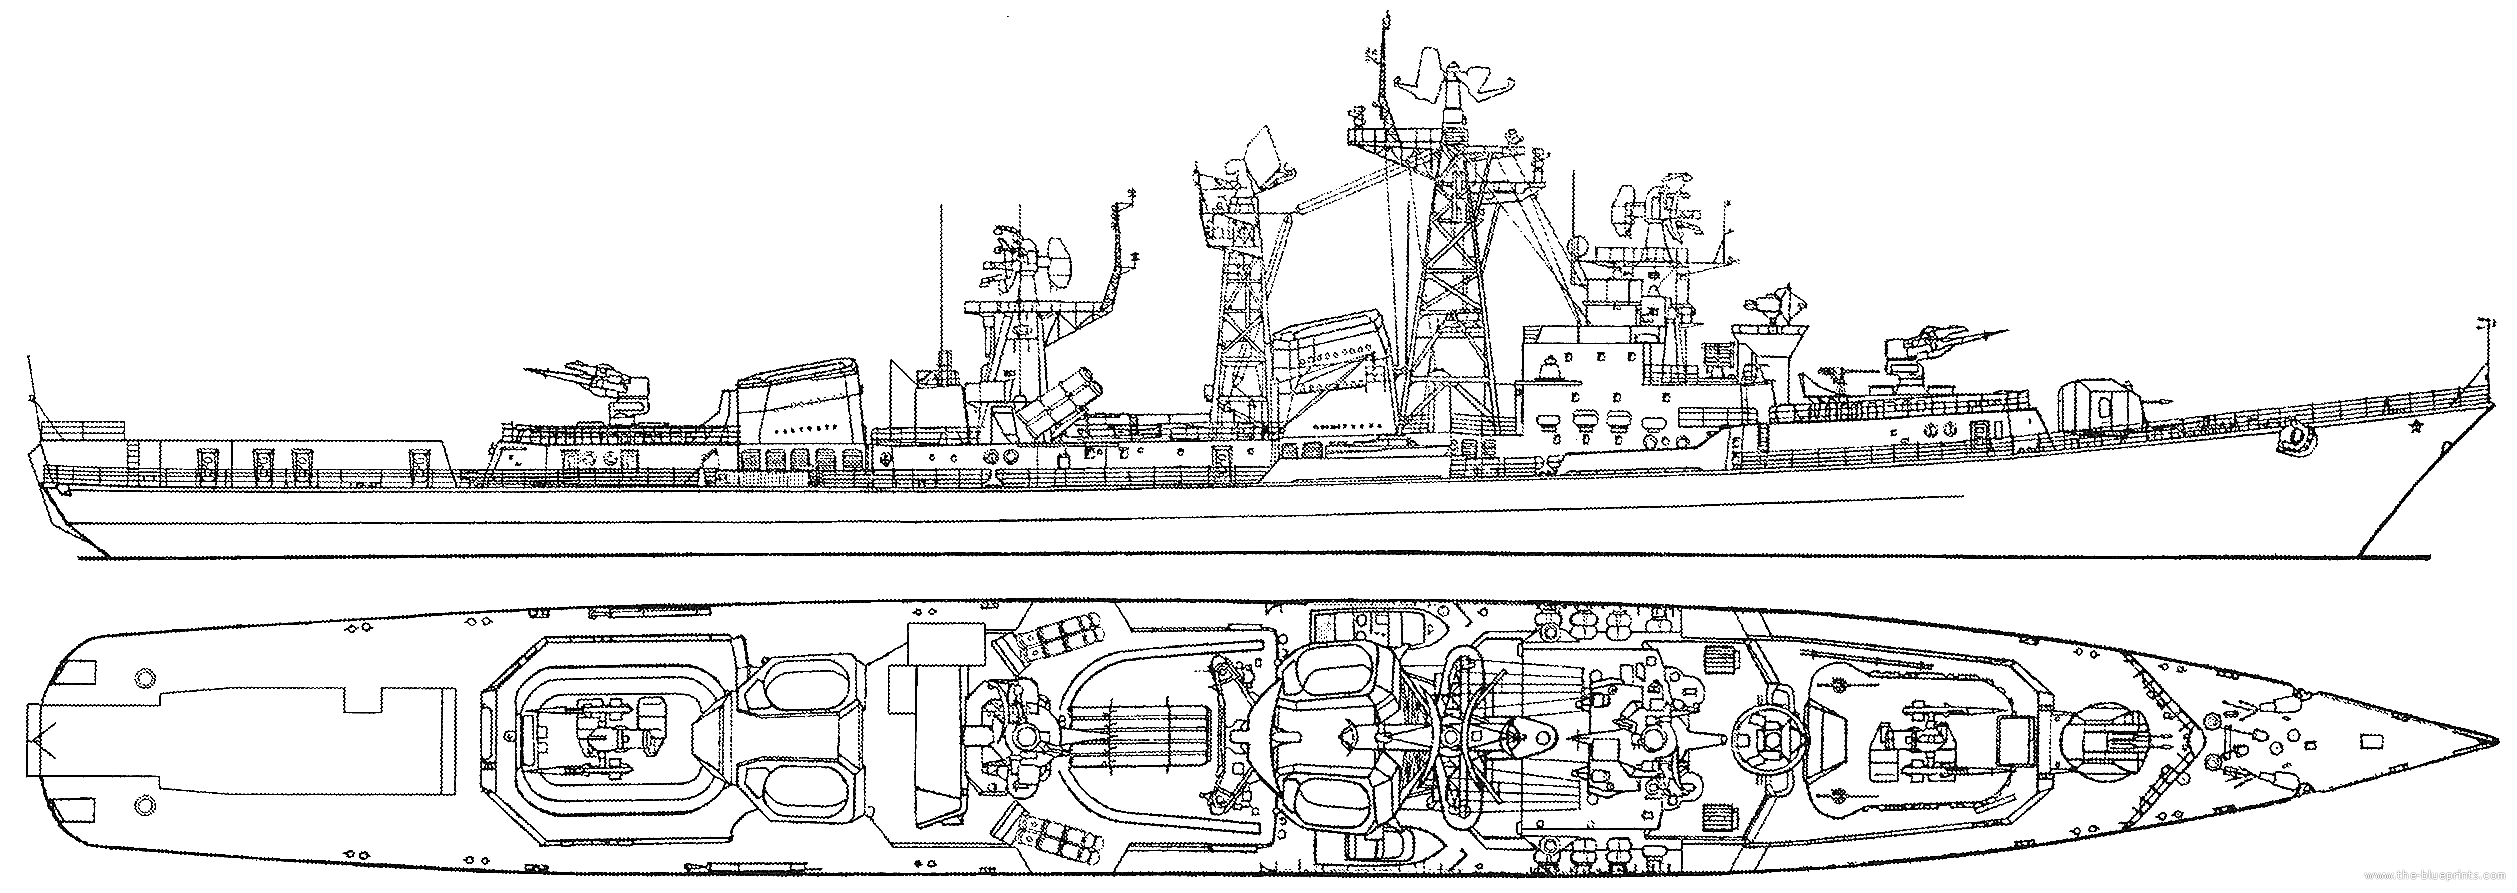 ussr-smetlivy-1965-kashin-class-project-61e-destroyer.png